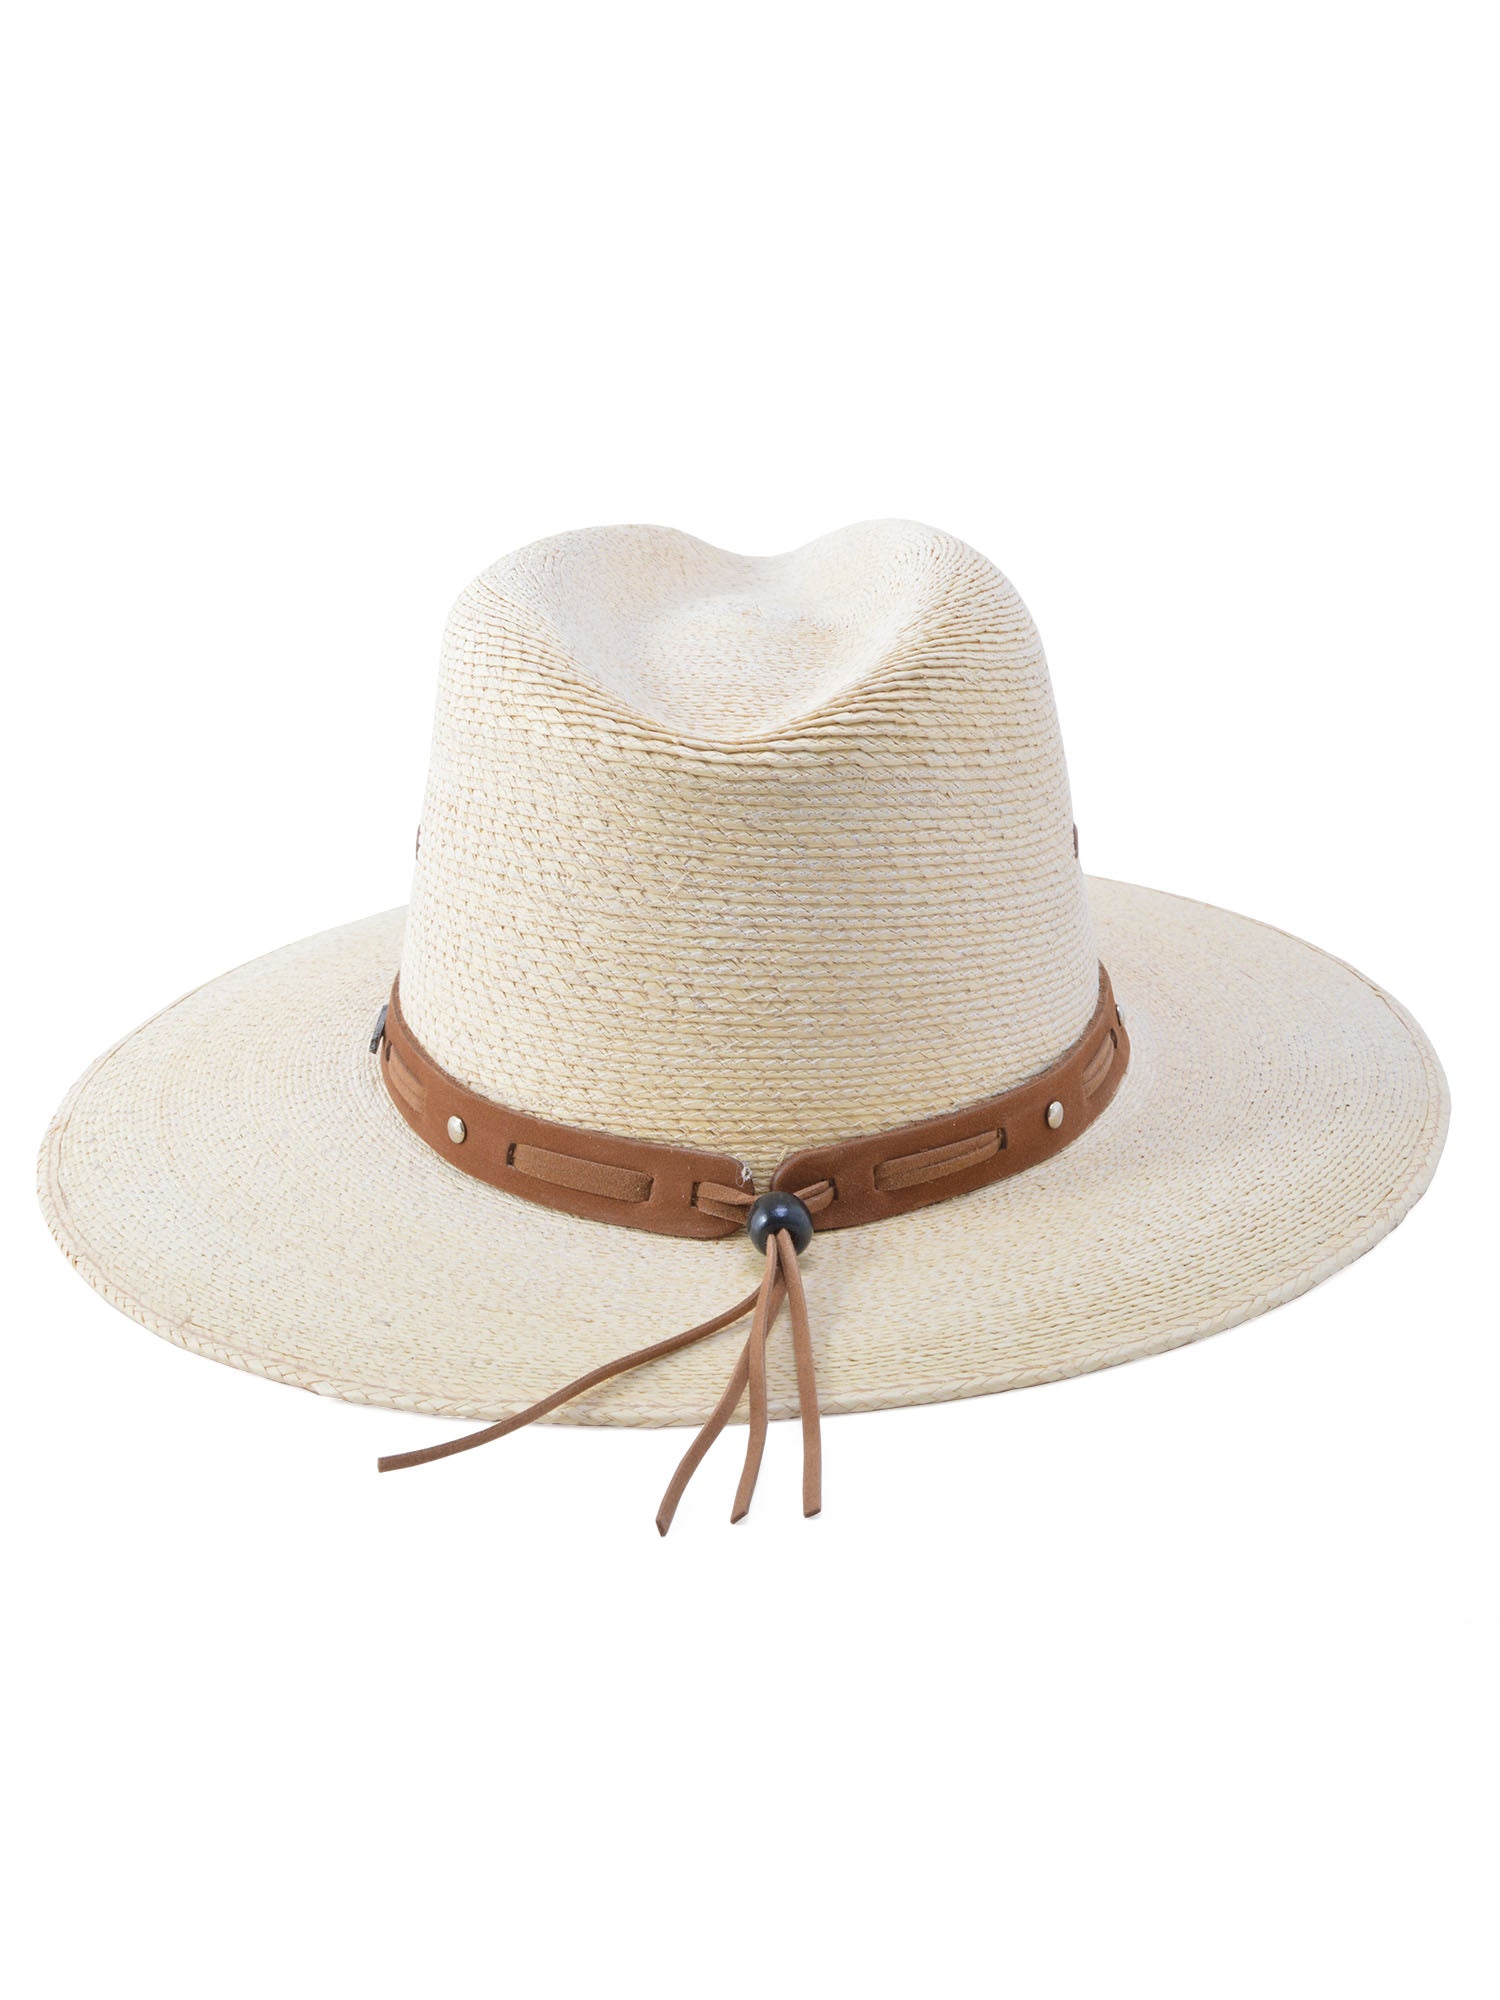 Stetson Chambers Palm Straw Aussie Hat